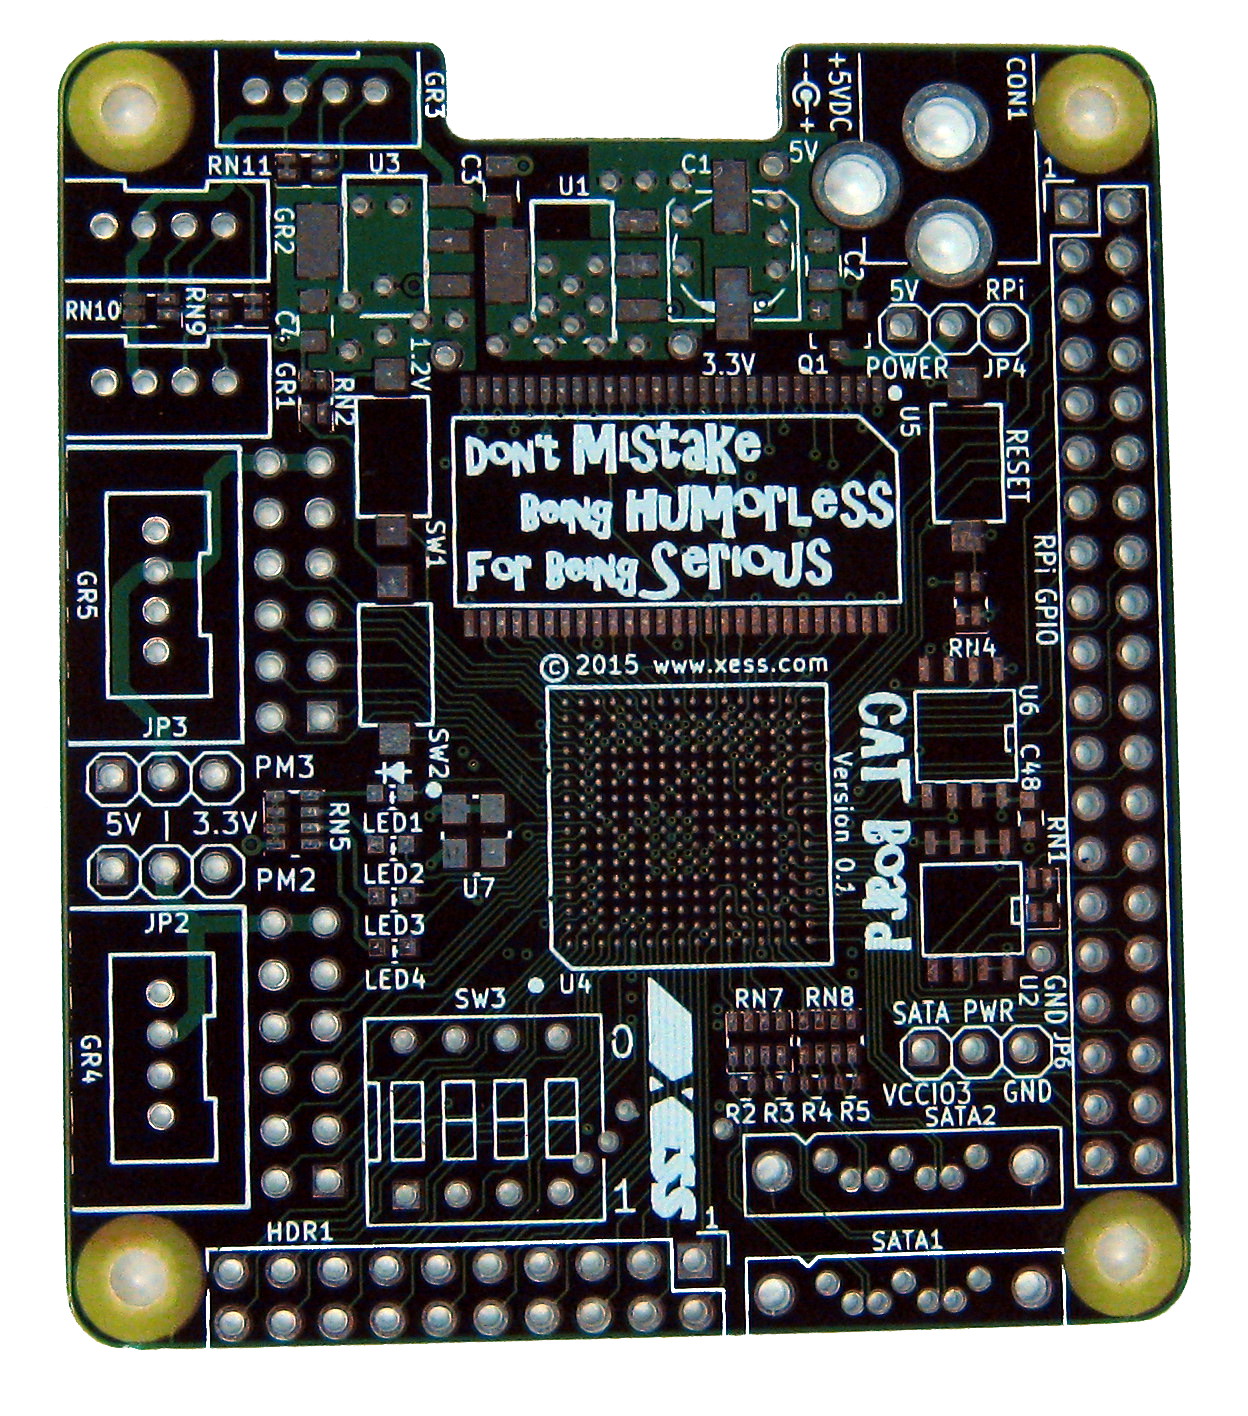 Board 1. Lattice ice40. Lattice FPGA ide. Lattice Chips FPGA. BW-md1 Board.